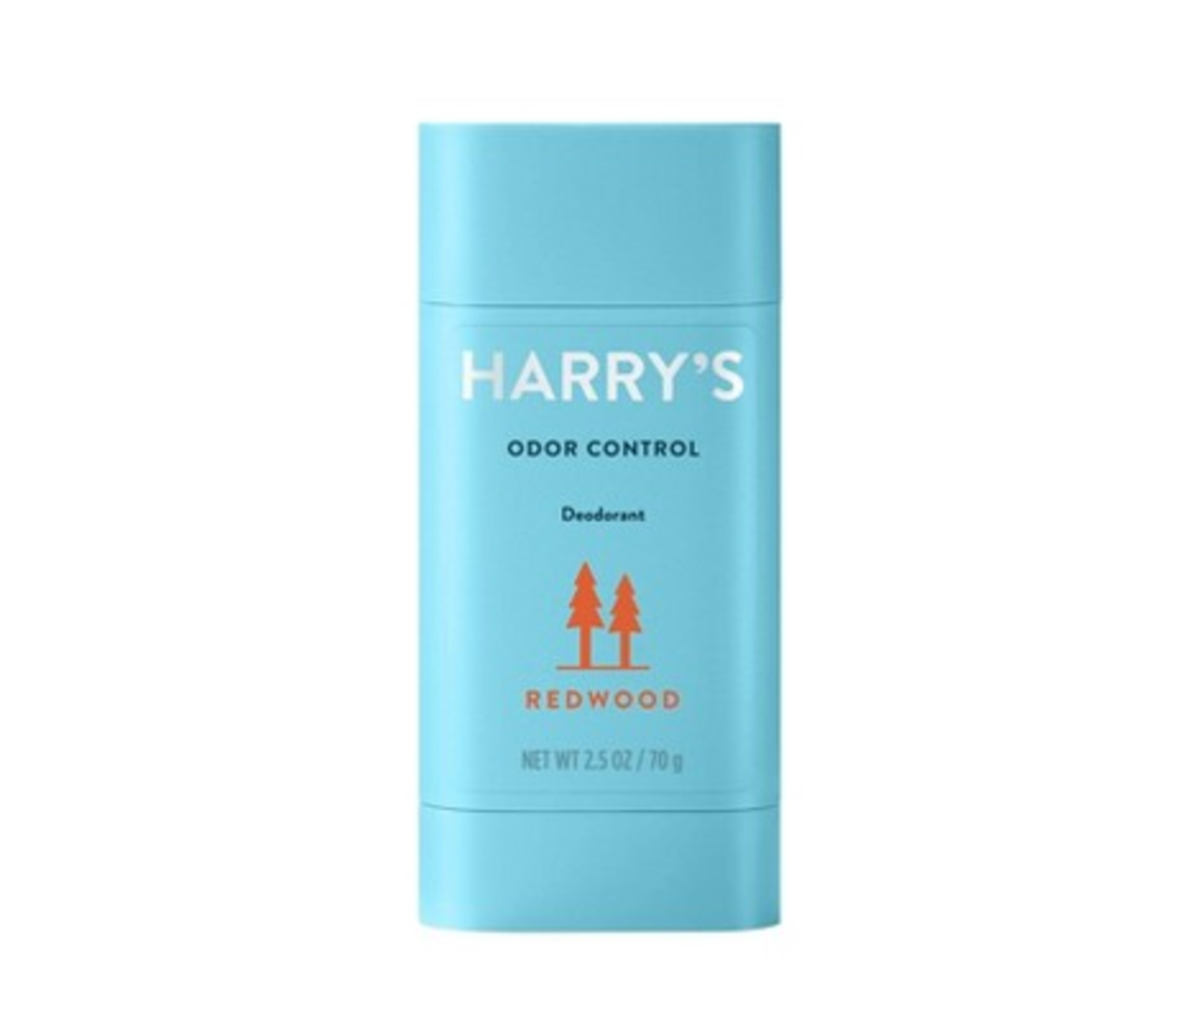 Harry's Odor Control Deodorant